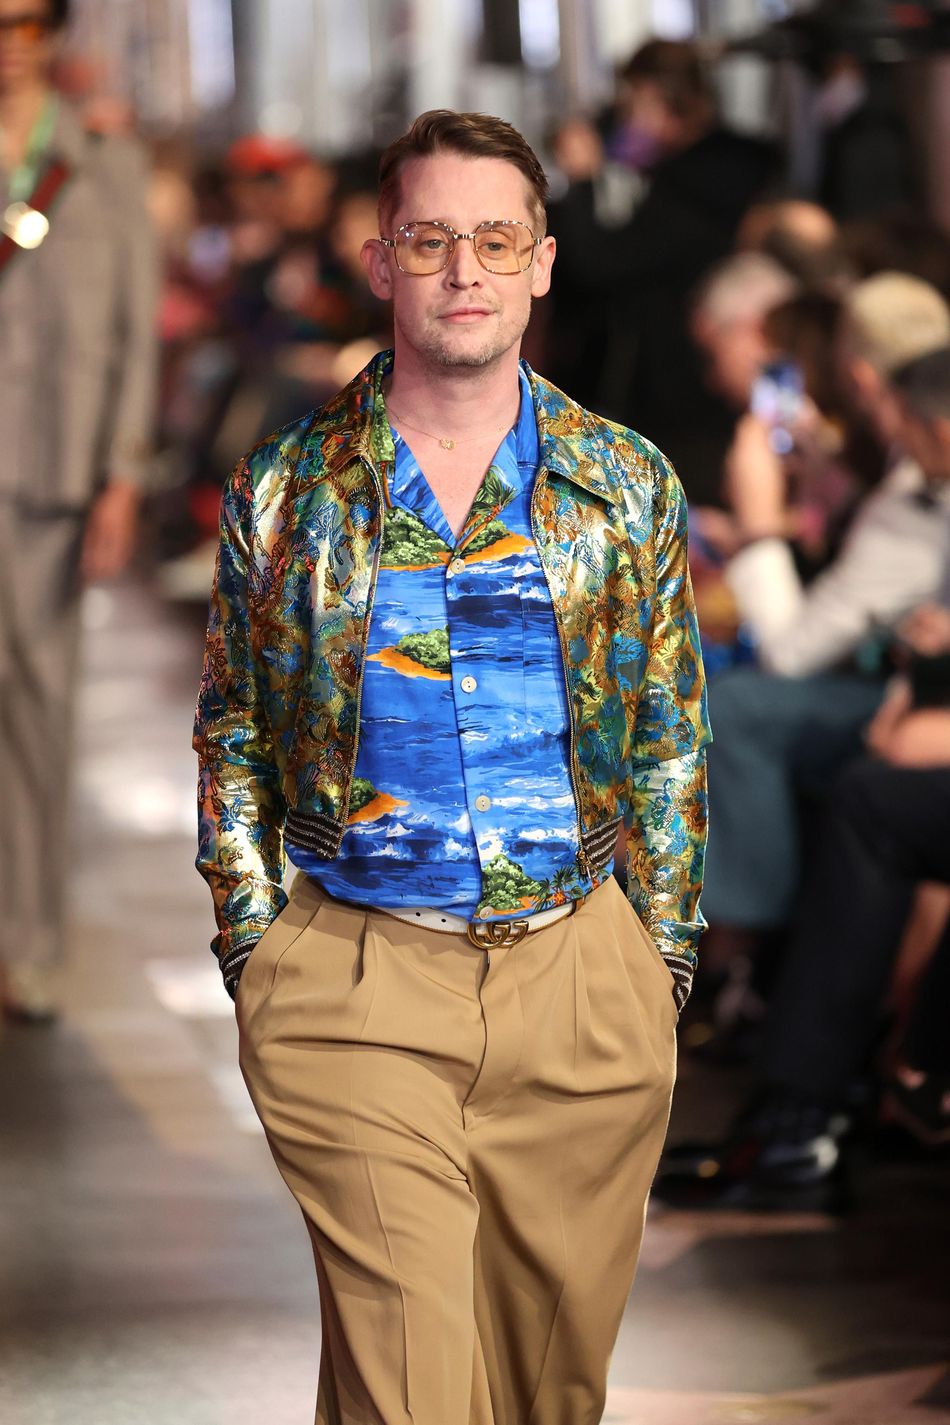 Macaulay Culkin Is Now A Gucci Model